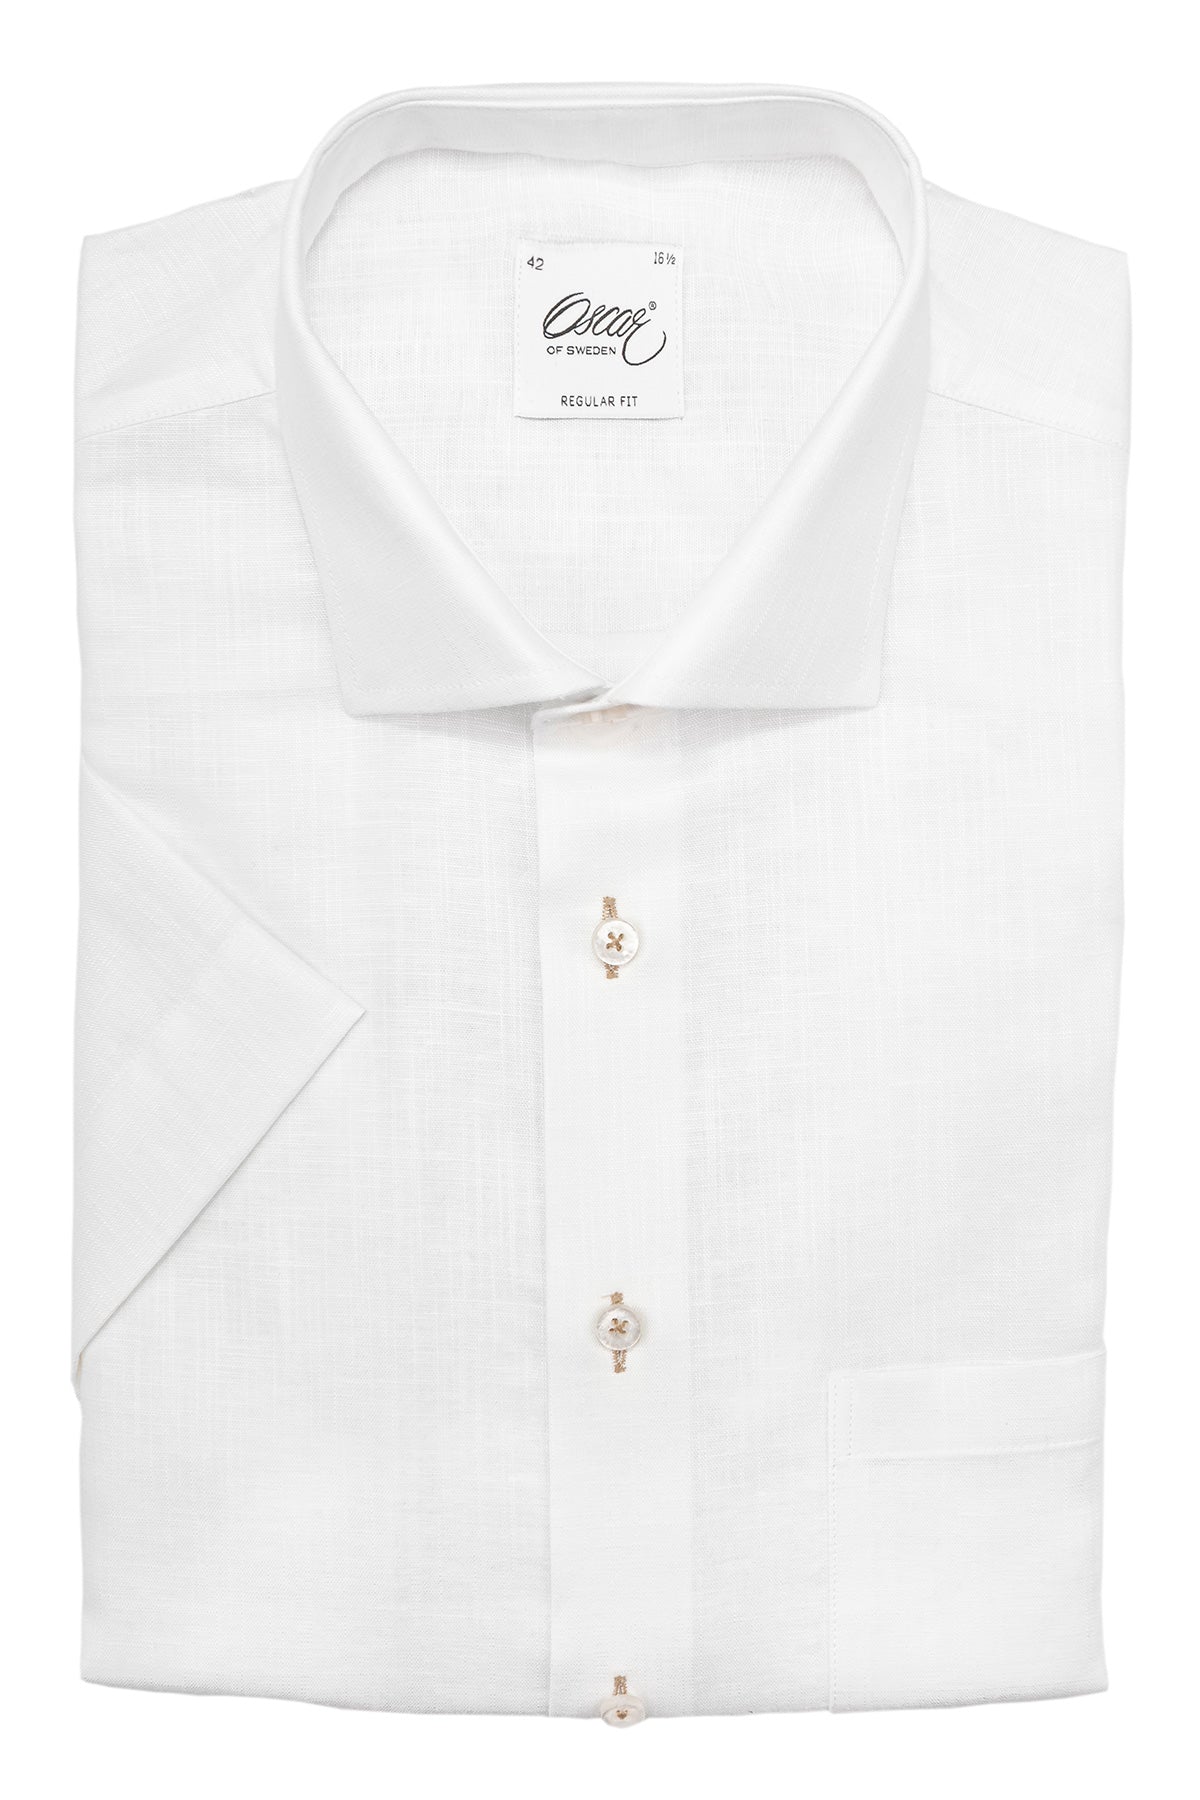 White linen regular fit short sleeve shirt